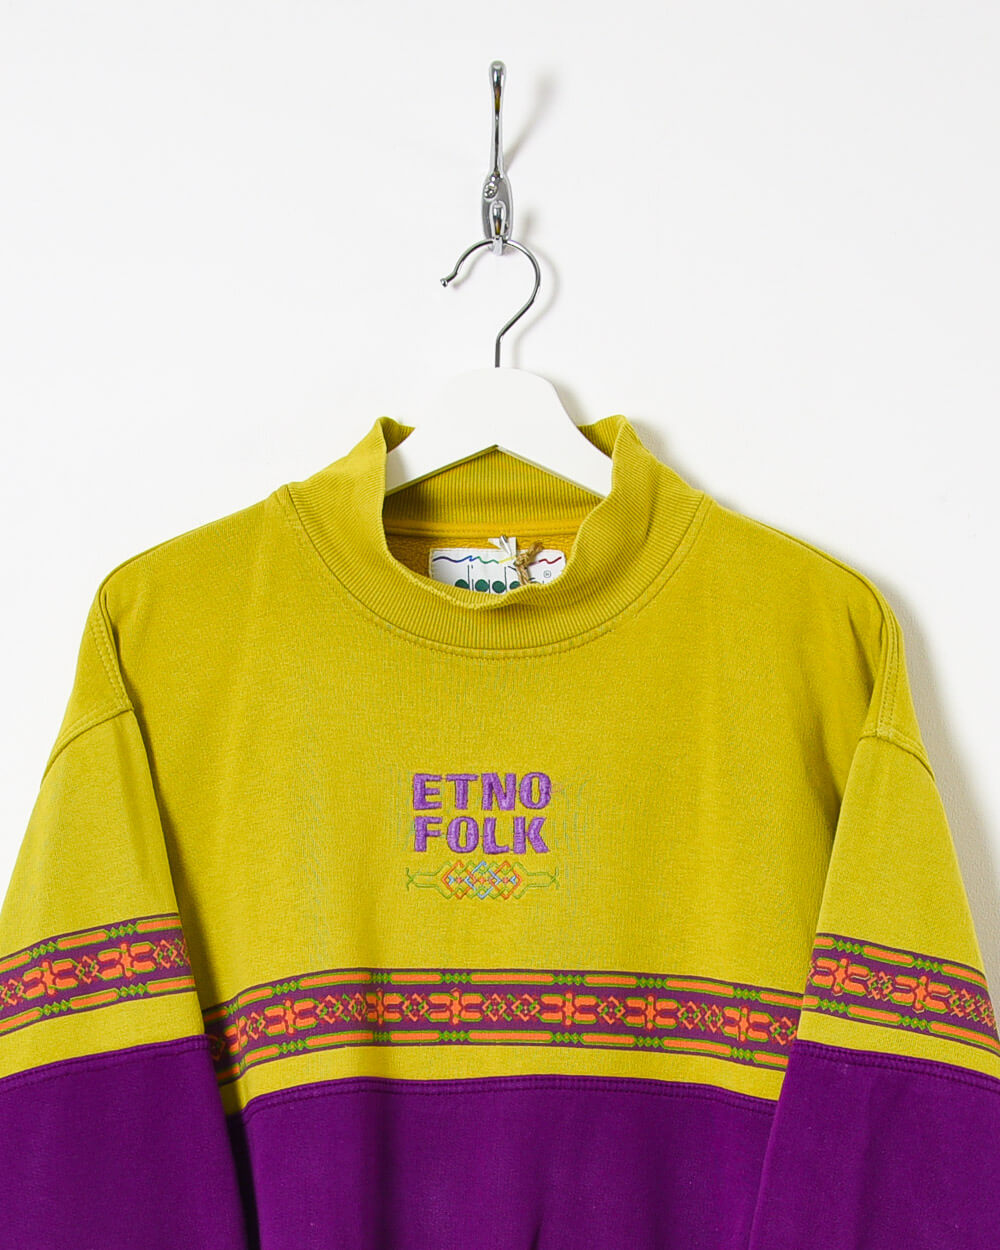 Diadora Etno Folk Sweatshirt - Medium - Domno Vintage 90s, 80s, 00s Retro and Vintage Clothing 